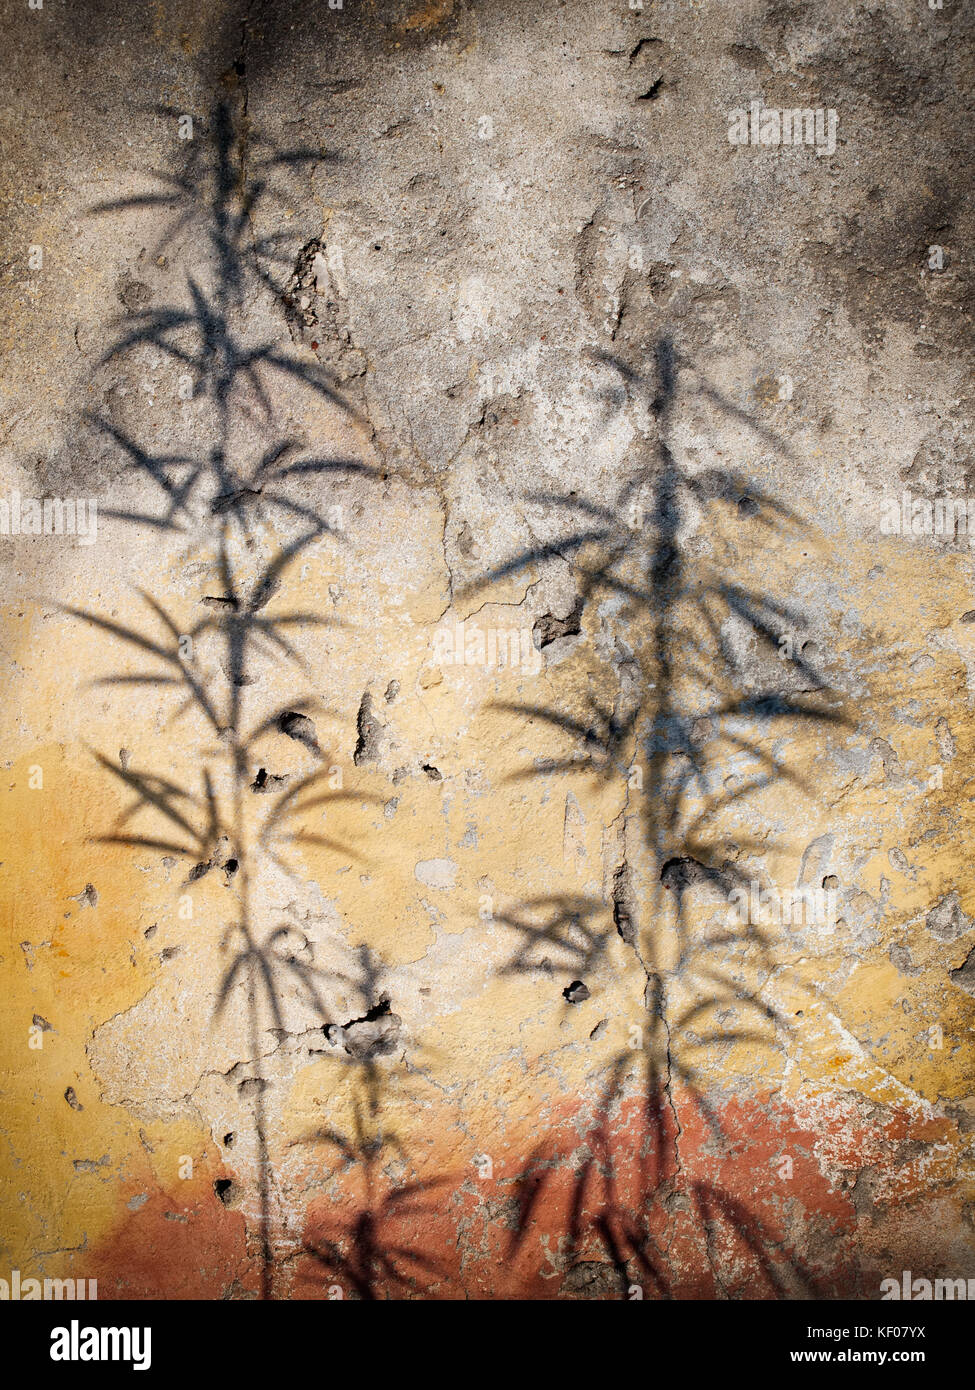 Shadows of Hemp or Cannabis plant on a grungy wall. Stock Photo